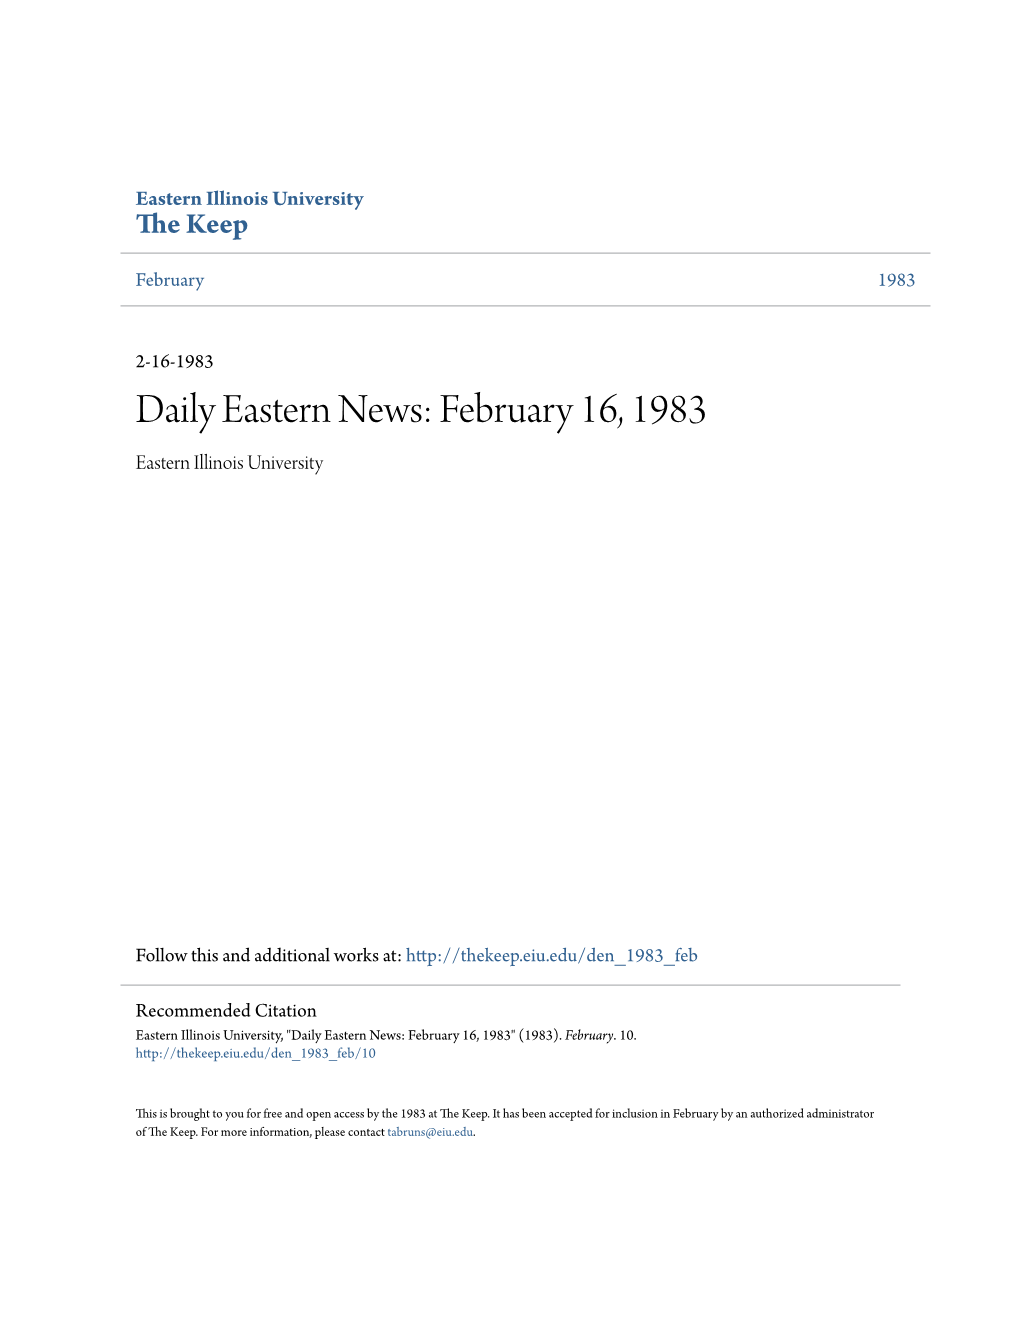 Astern News: February 16, 1983 Eastern Illinois University